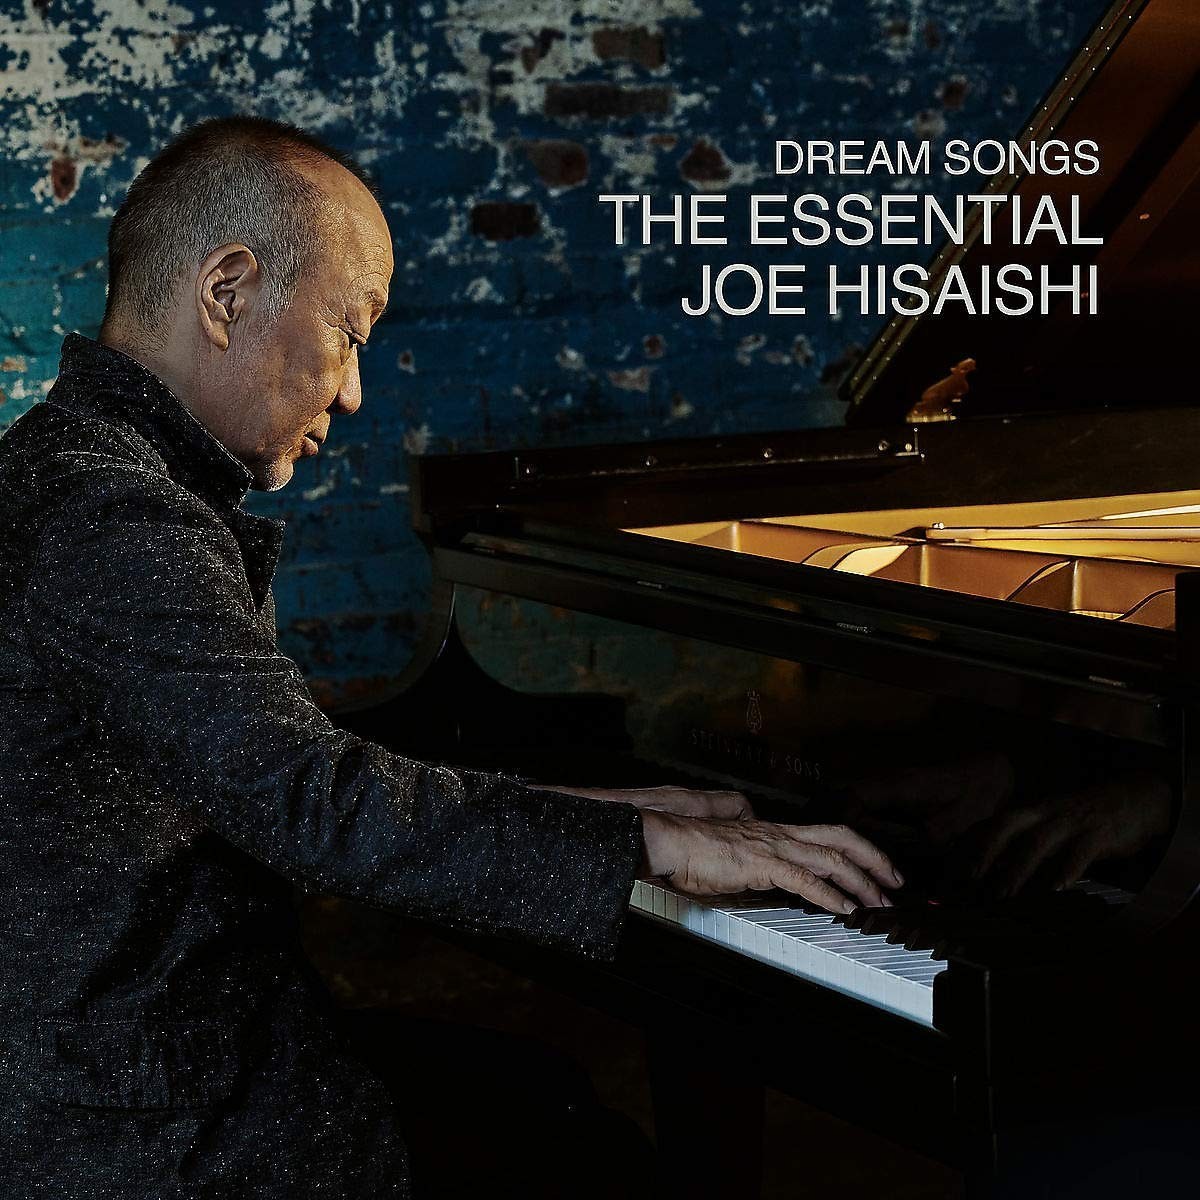 Dream Songs: The Essential Joe Hisaishi - okładka albumu [2CD] (front)